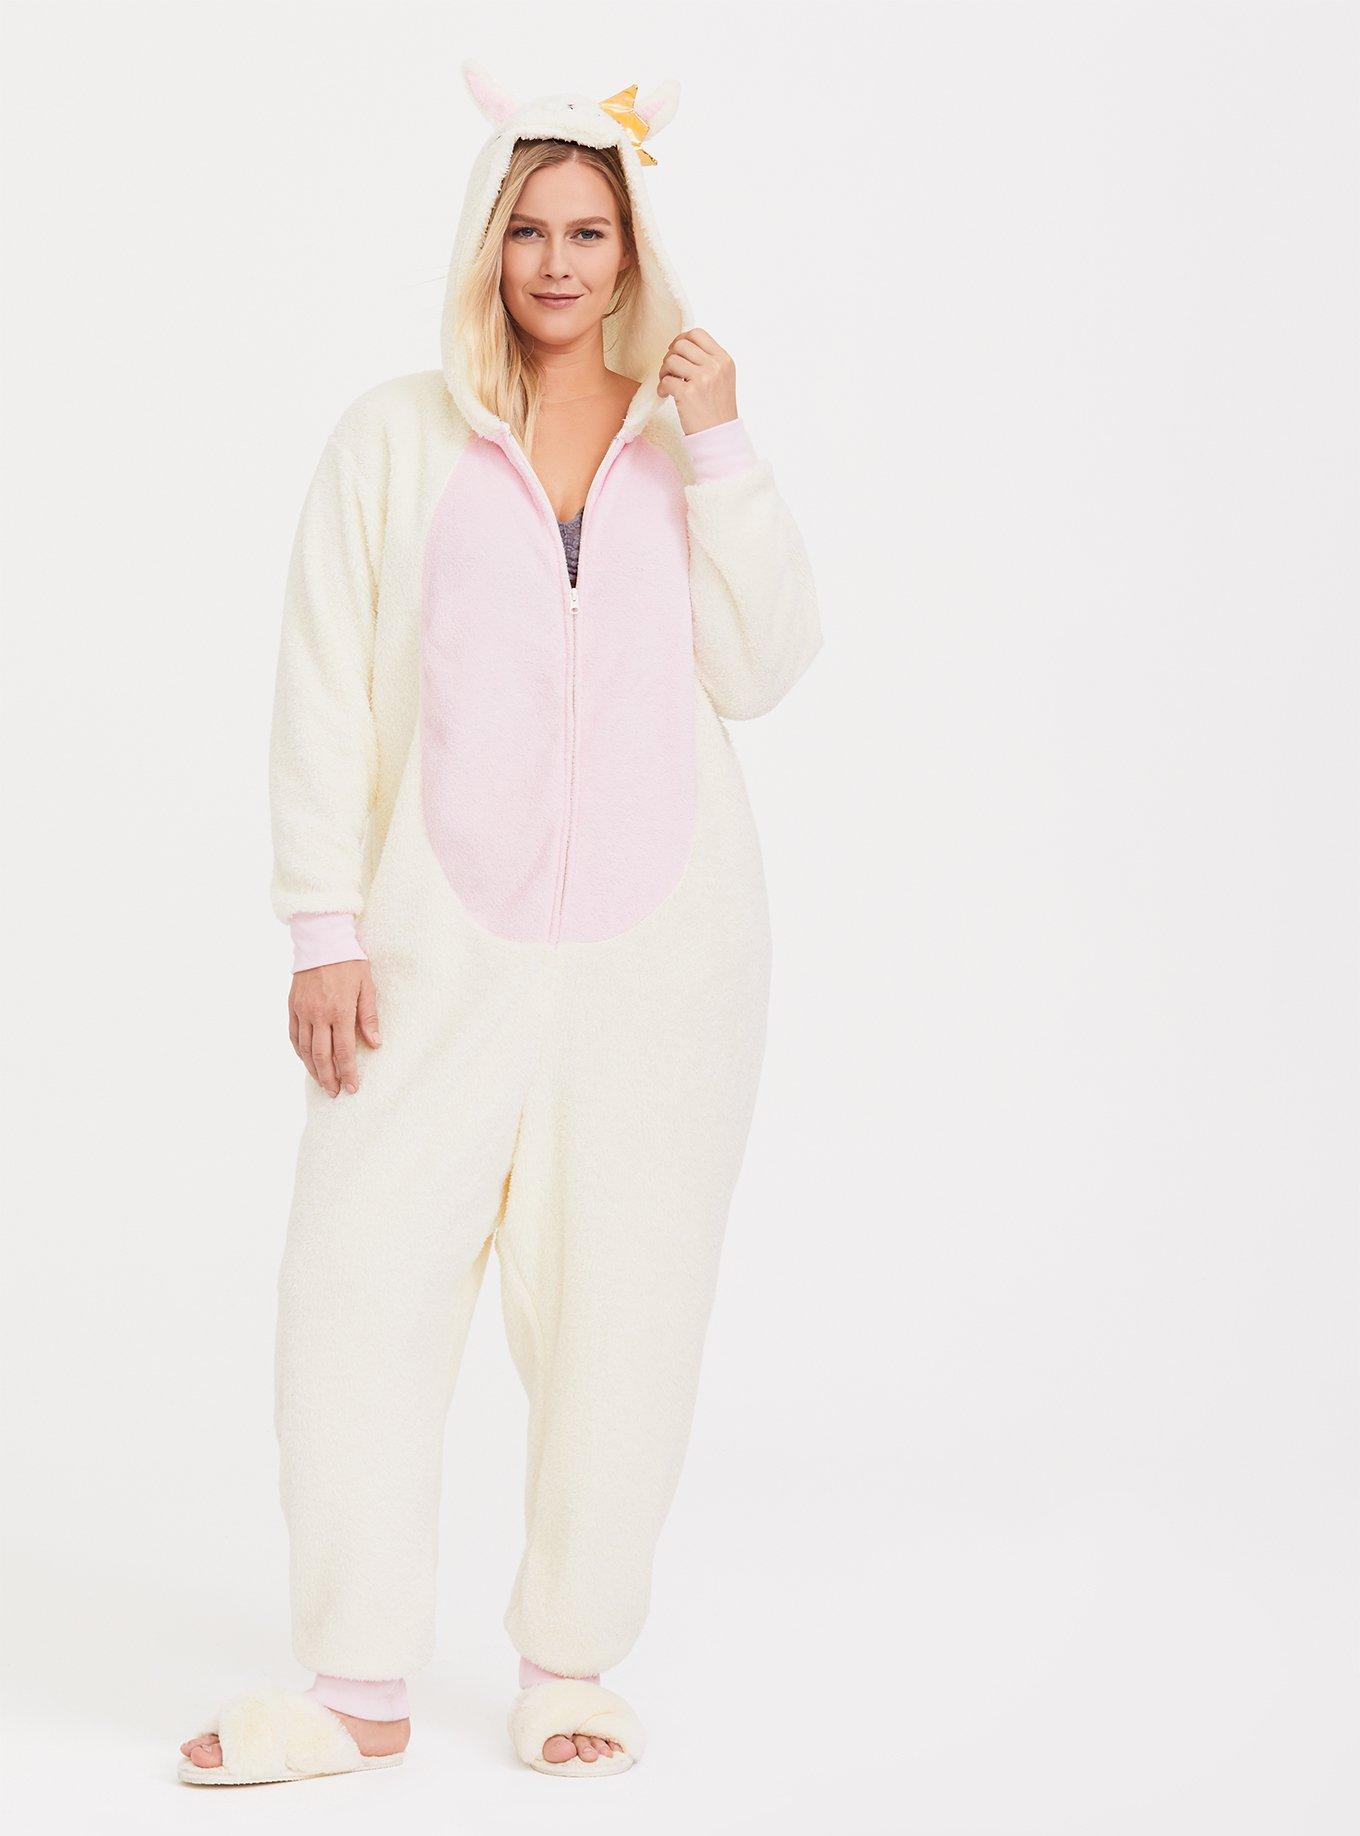 Plus Size - Onesie Pajamas - Disney Winnie The Pooh - Torrid